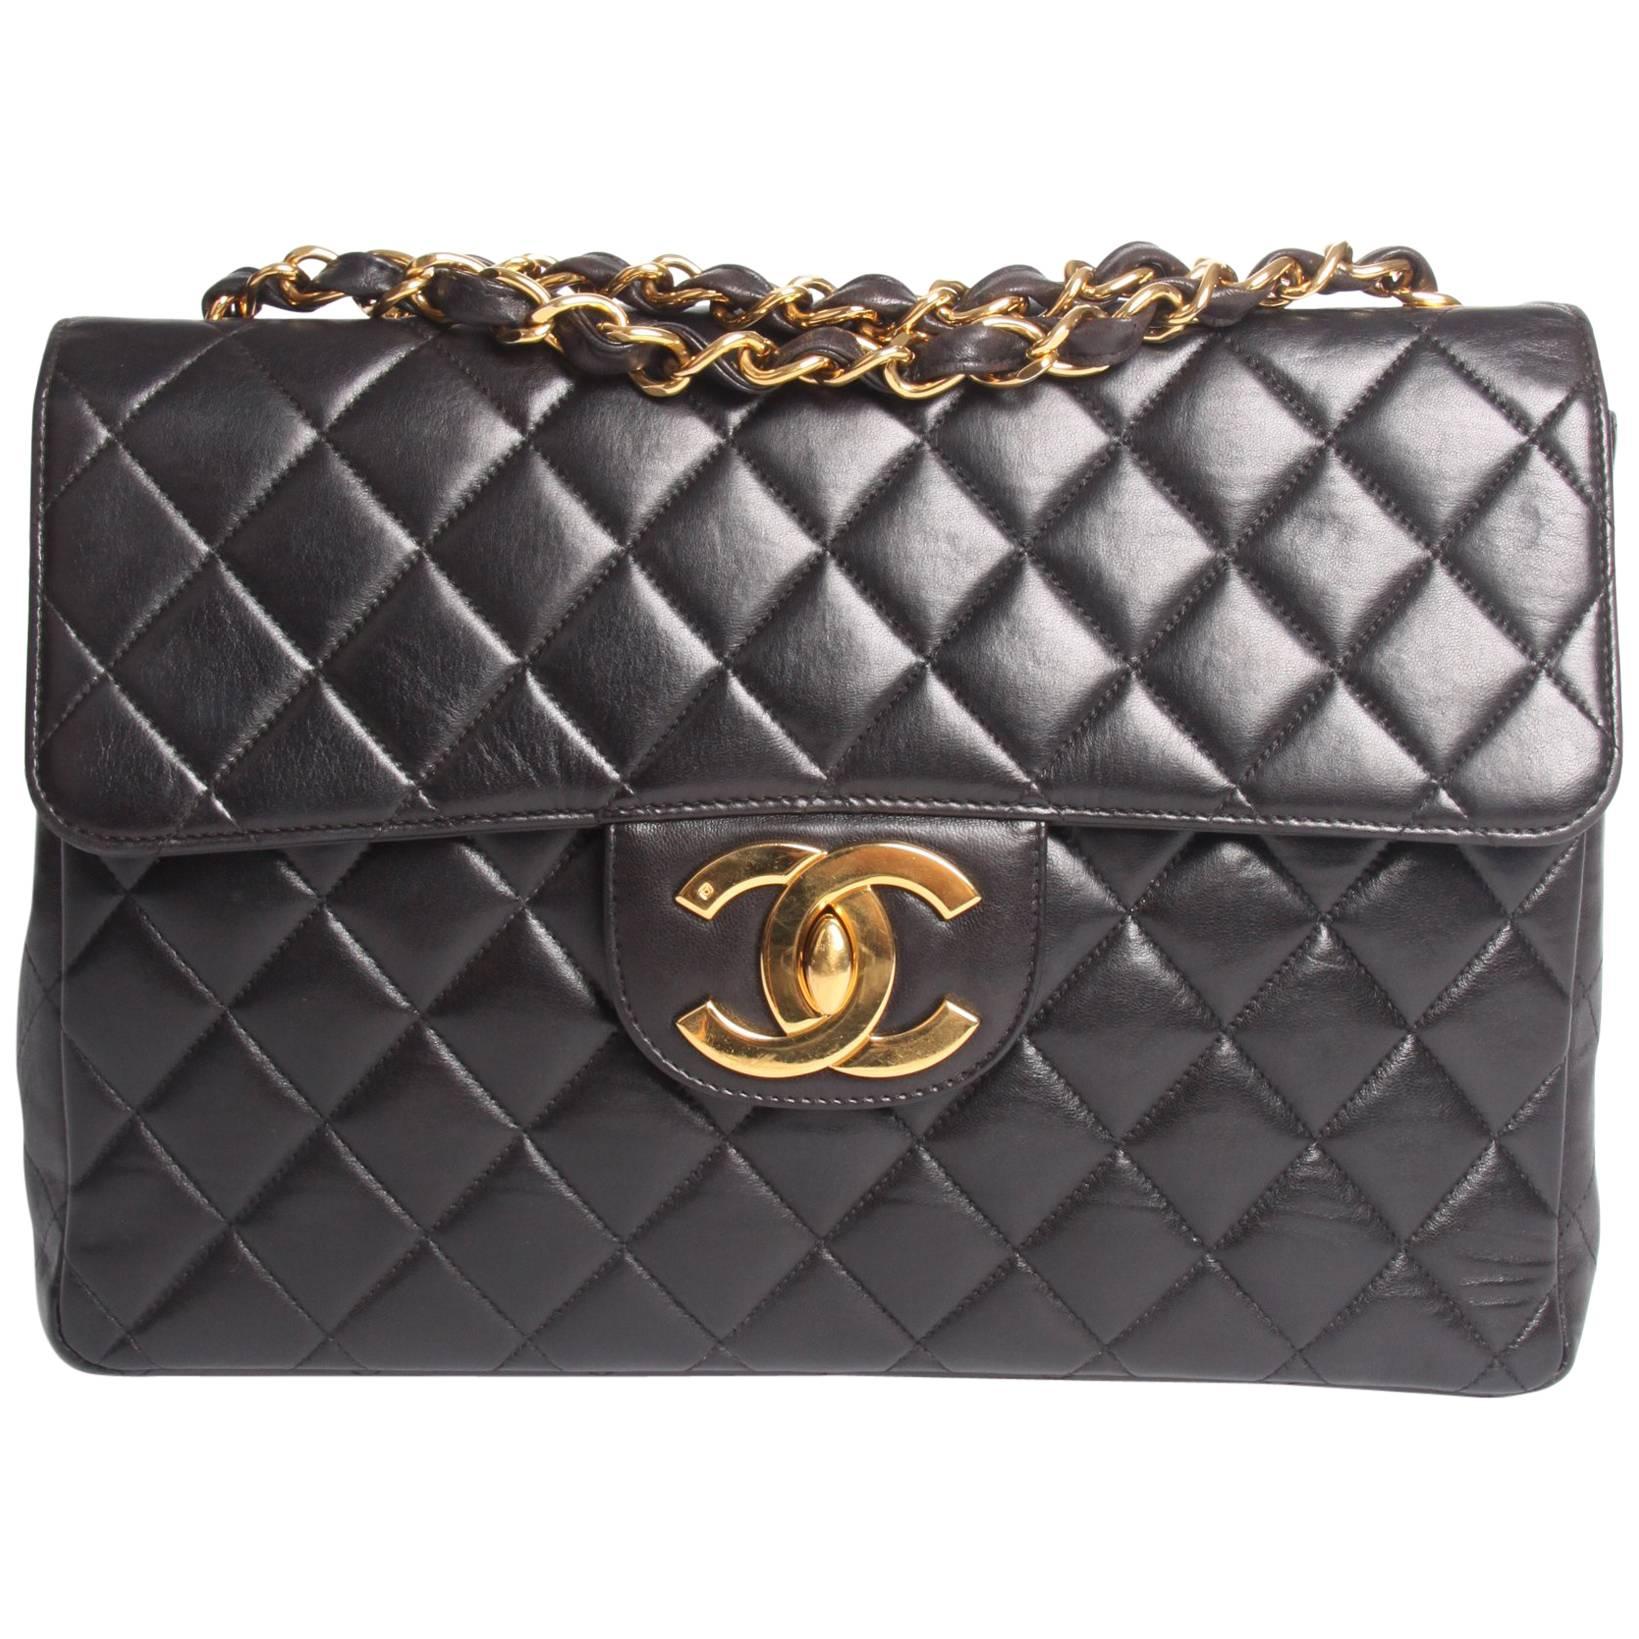  Chanel 2.55 Timeless Jumbo Flap Bag - black leather 1997